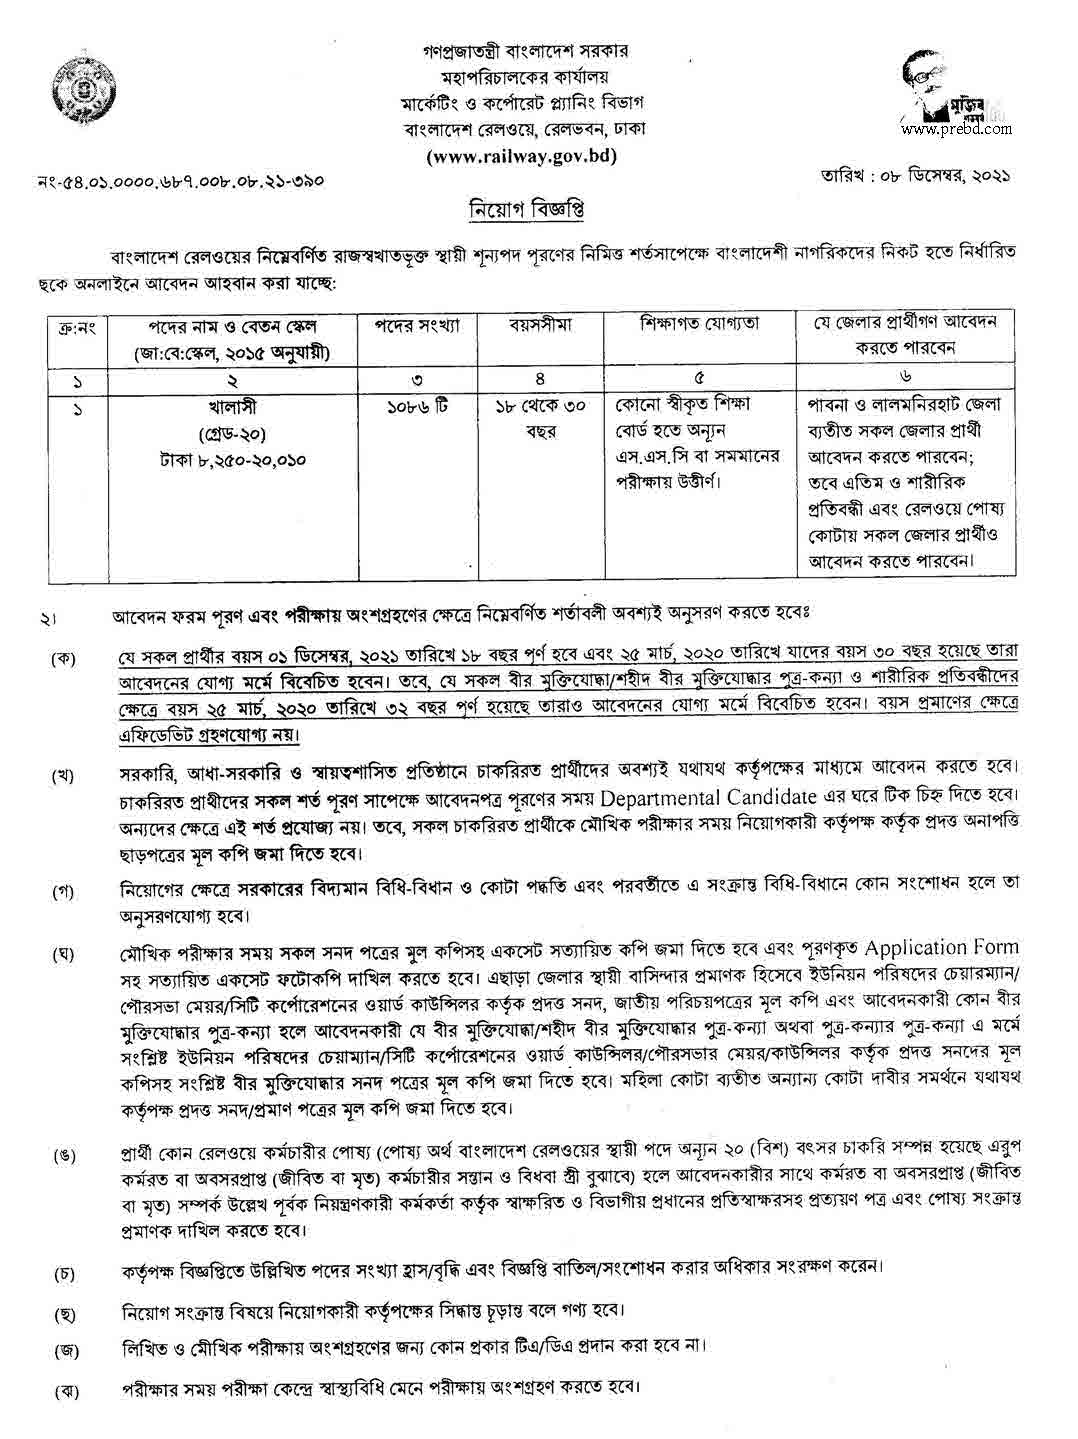 Bangladesh Railway govt Job Circular 2021- br.teletalk.com.bd Apply online